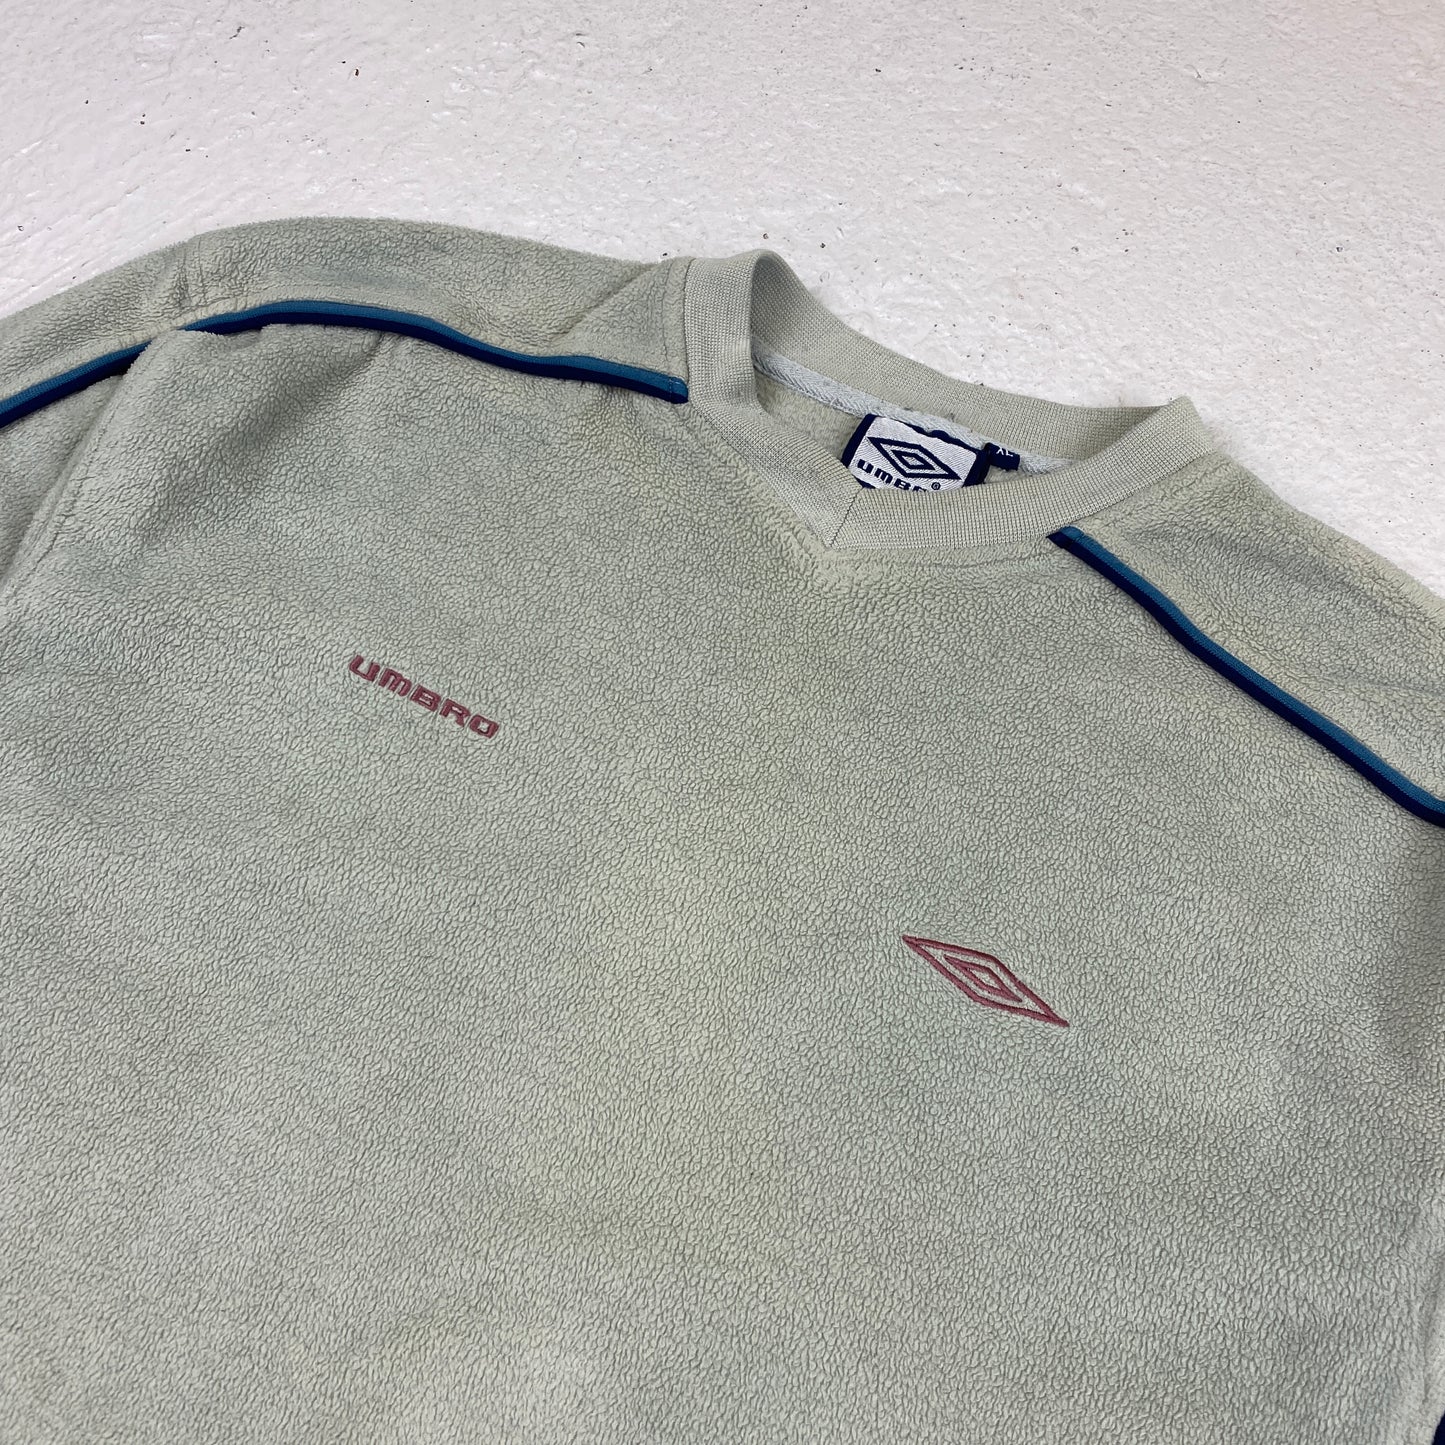 Umbro embroidered v-neck fleece embroidered sweater (L)